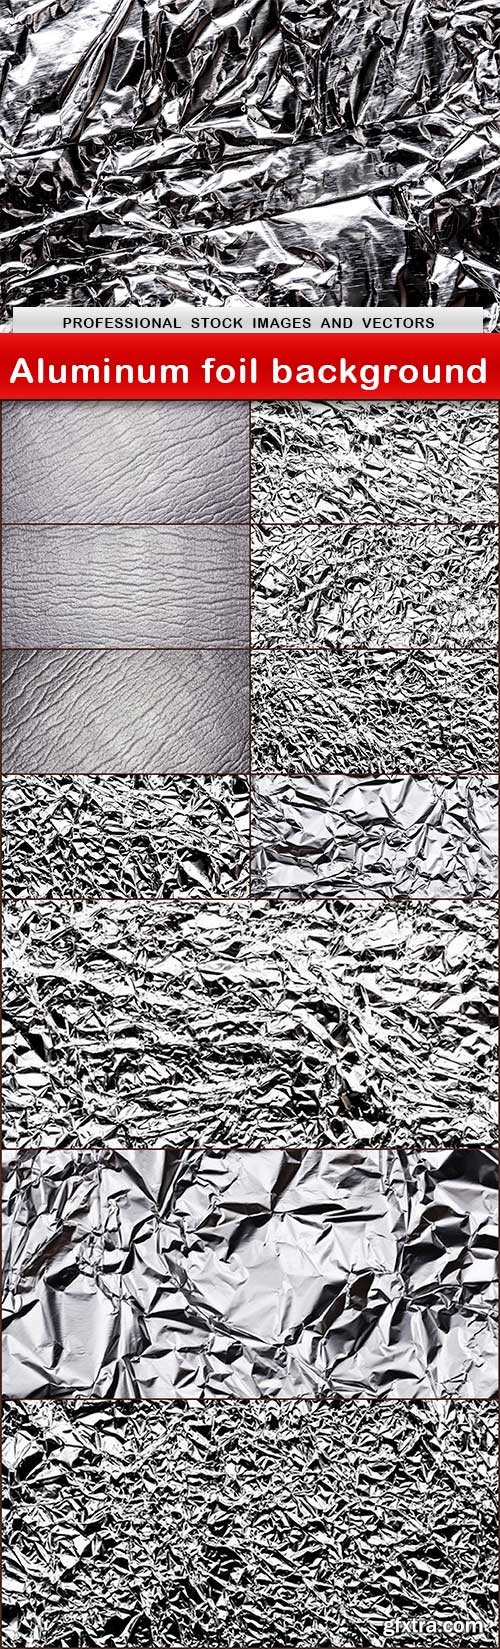 Aluminum foil background - 12 UHQ JPEG